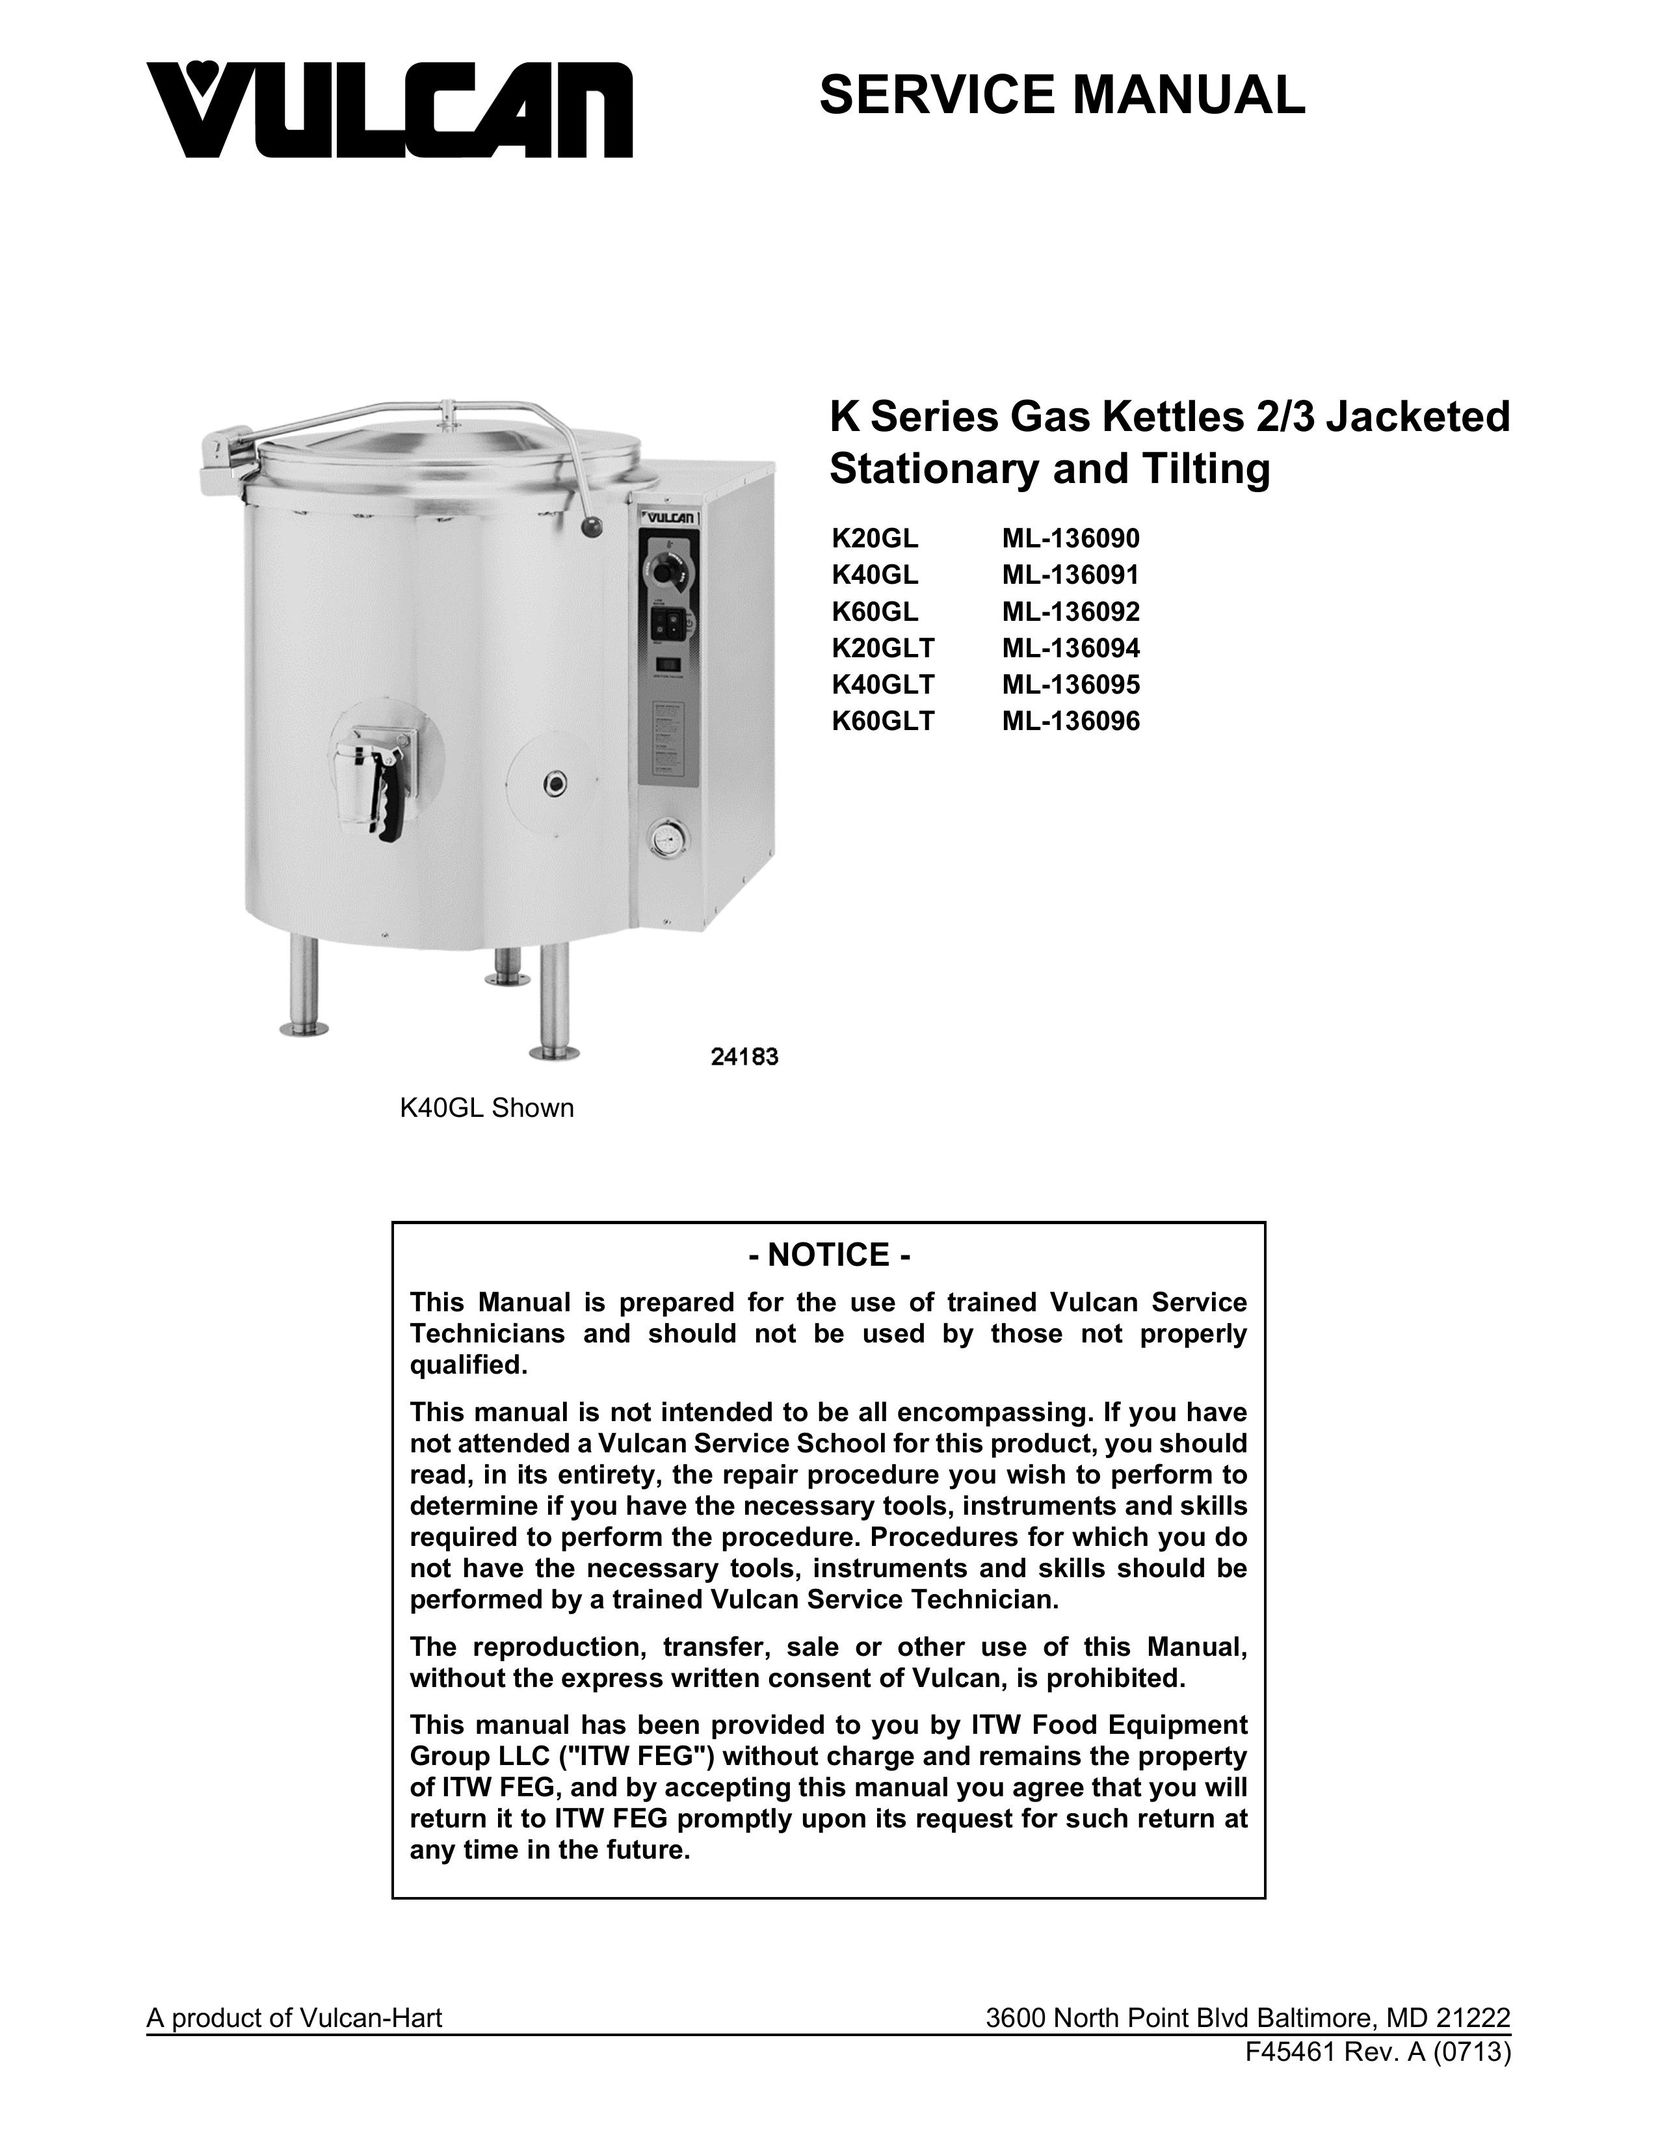 Vulcan-Hart K40GL Hot Beverage Maker User Manual